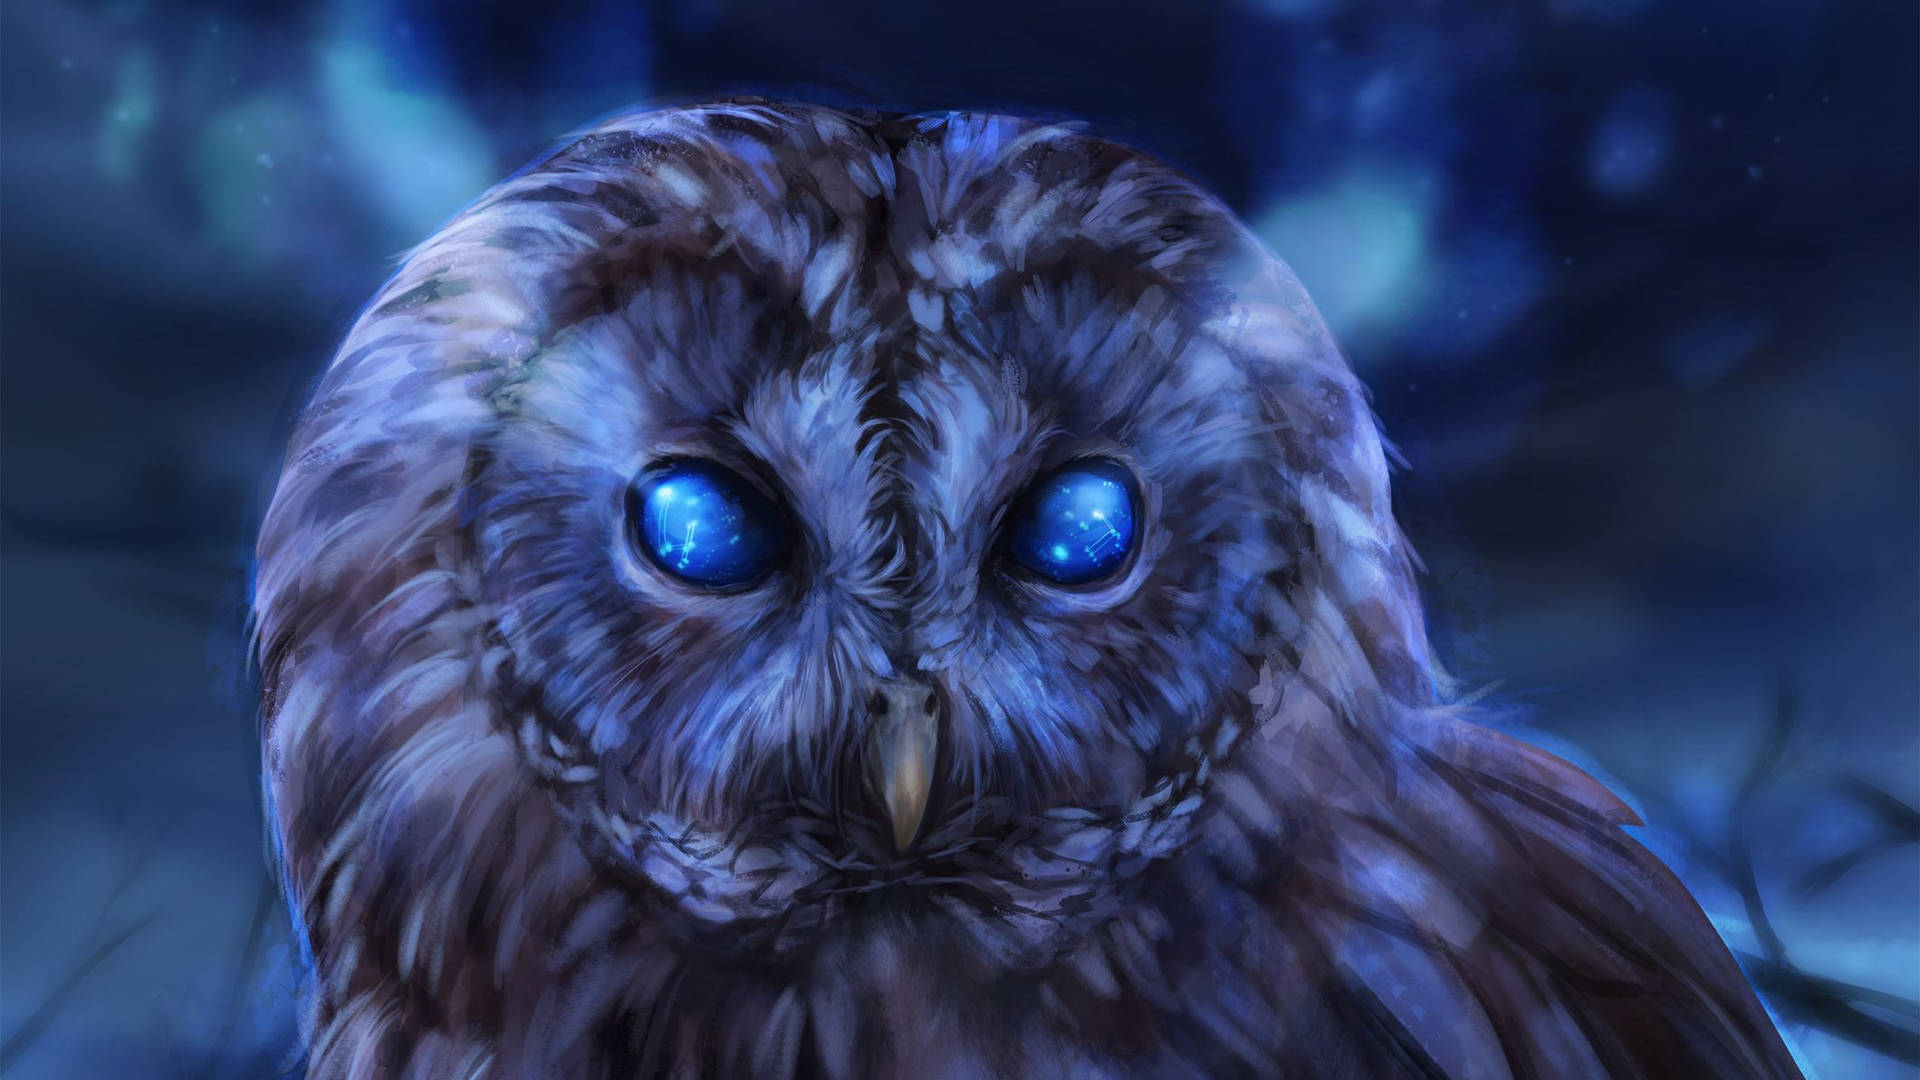 Blue Owl Magical Eyes